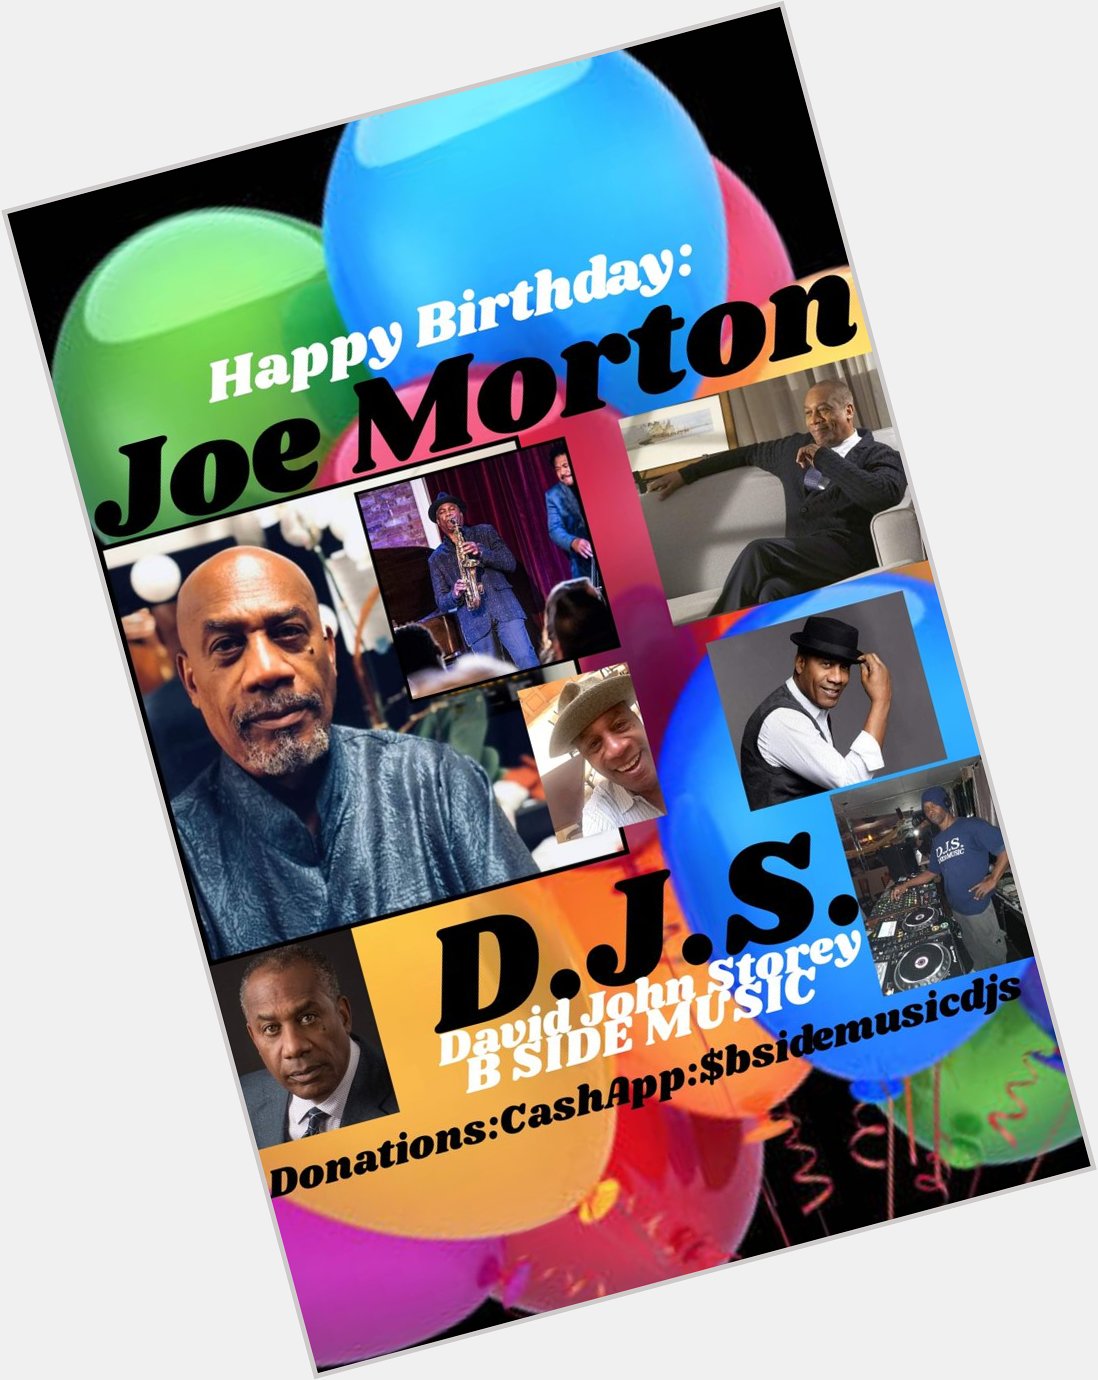 I(D.J.S.) saying Happy Birthday to:Stage/Television/Film Actor: : \"JOE MORTON\"!!!! 